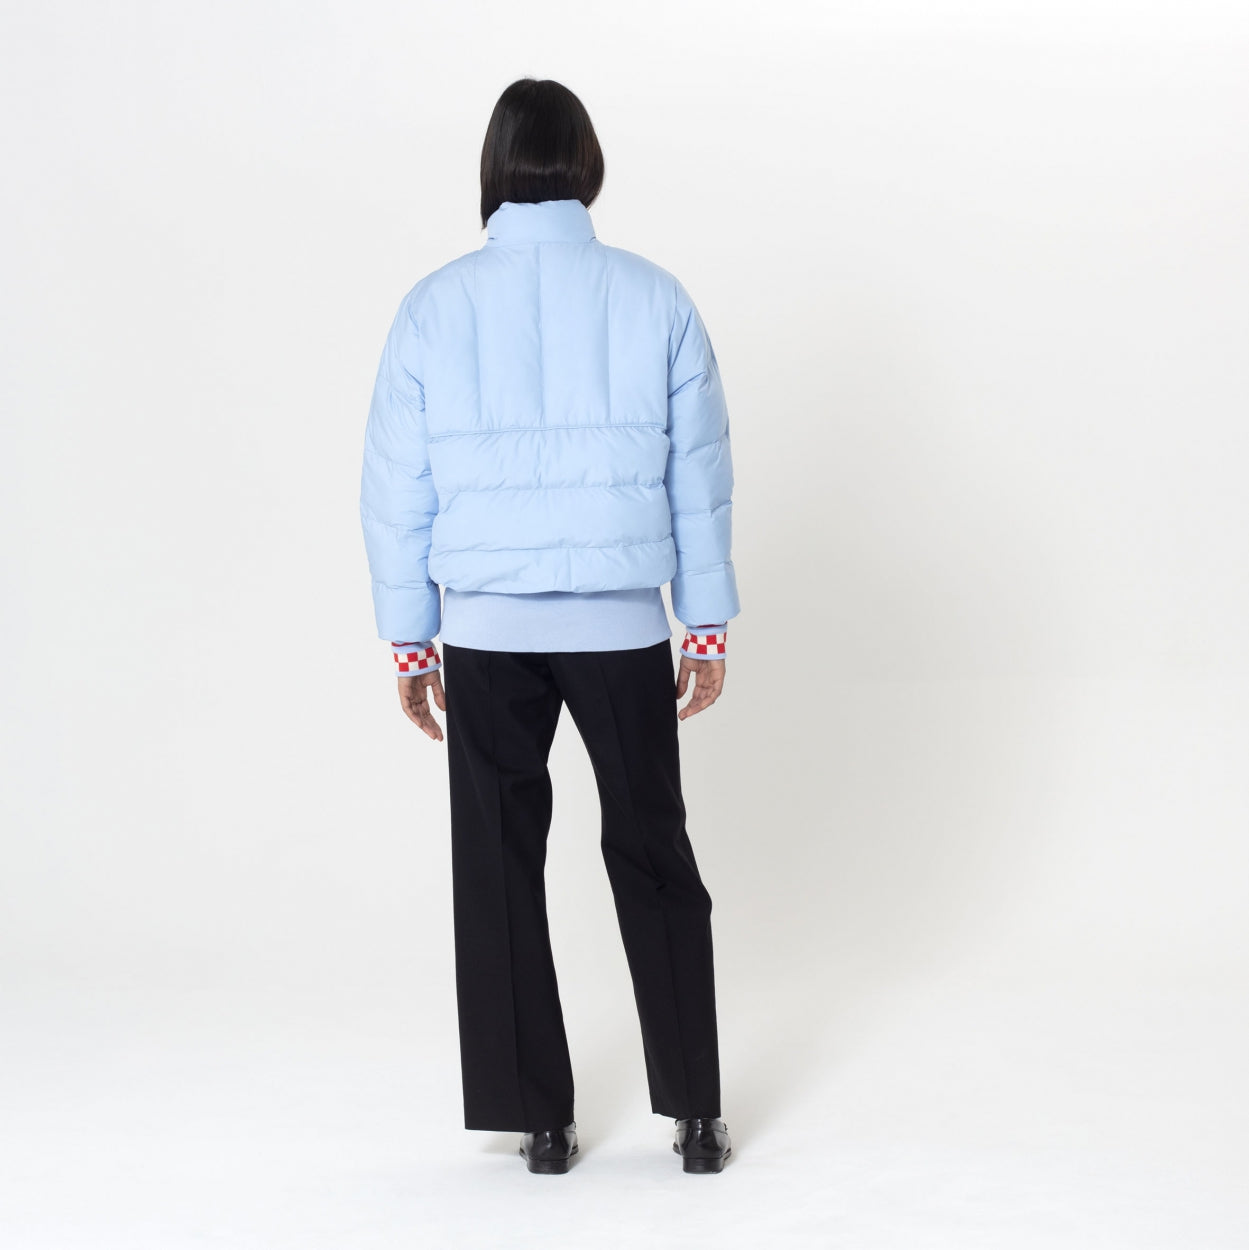 Clouds GOFRANCK jacket 2023-2024 womens waterproof winter jacket product image